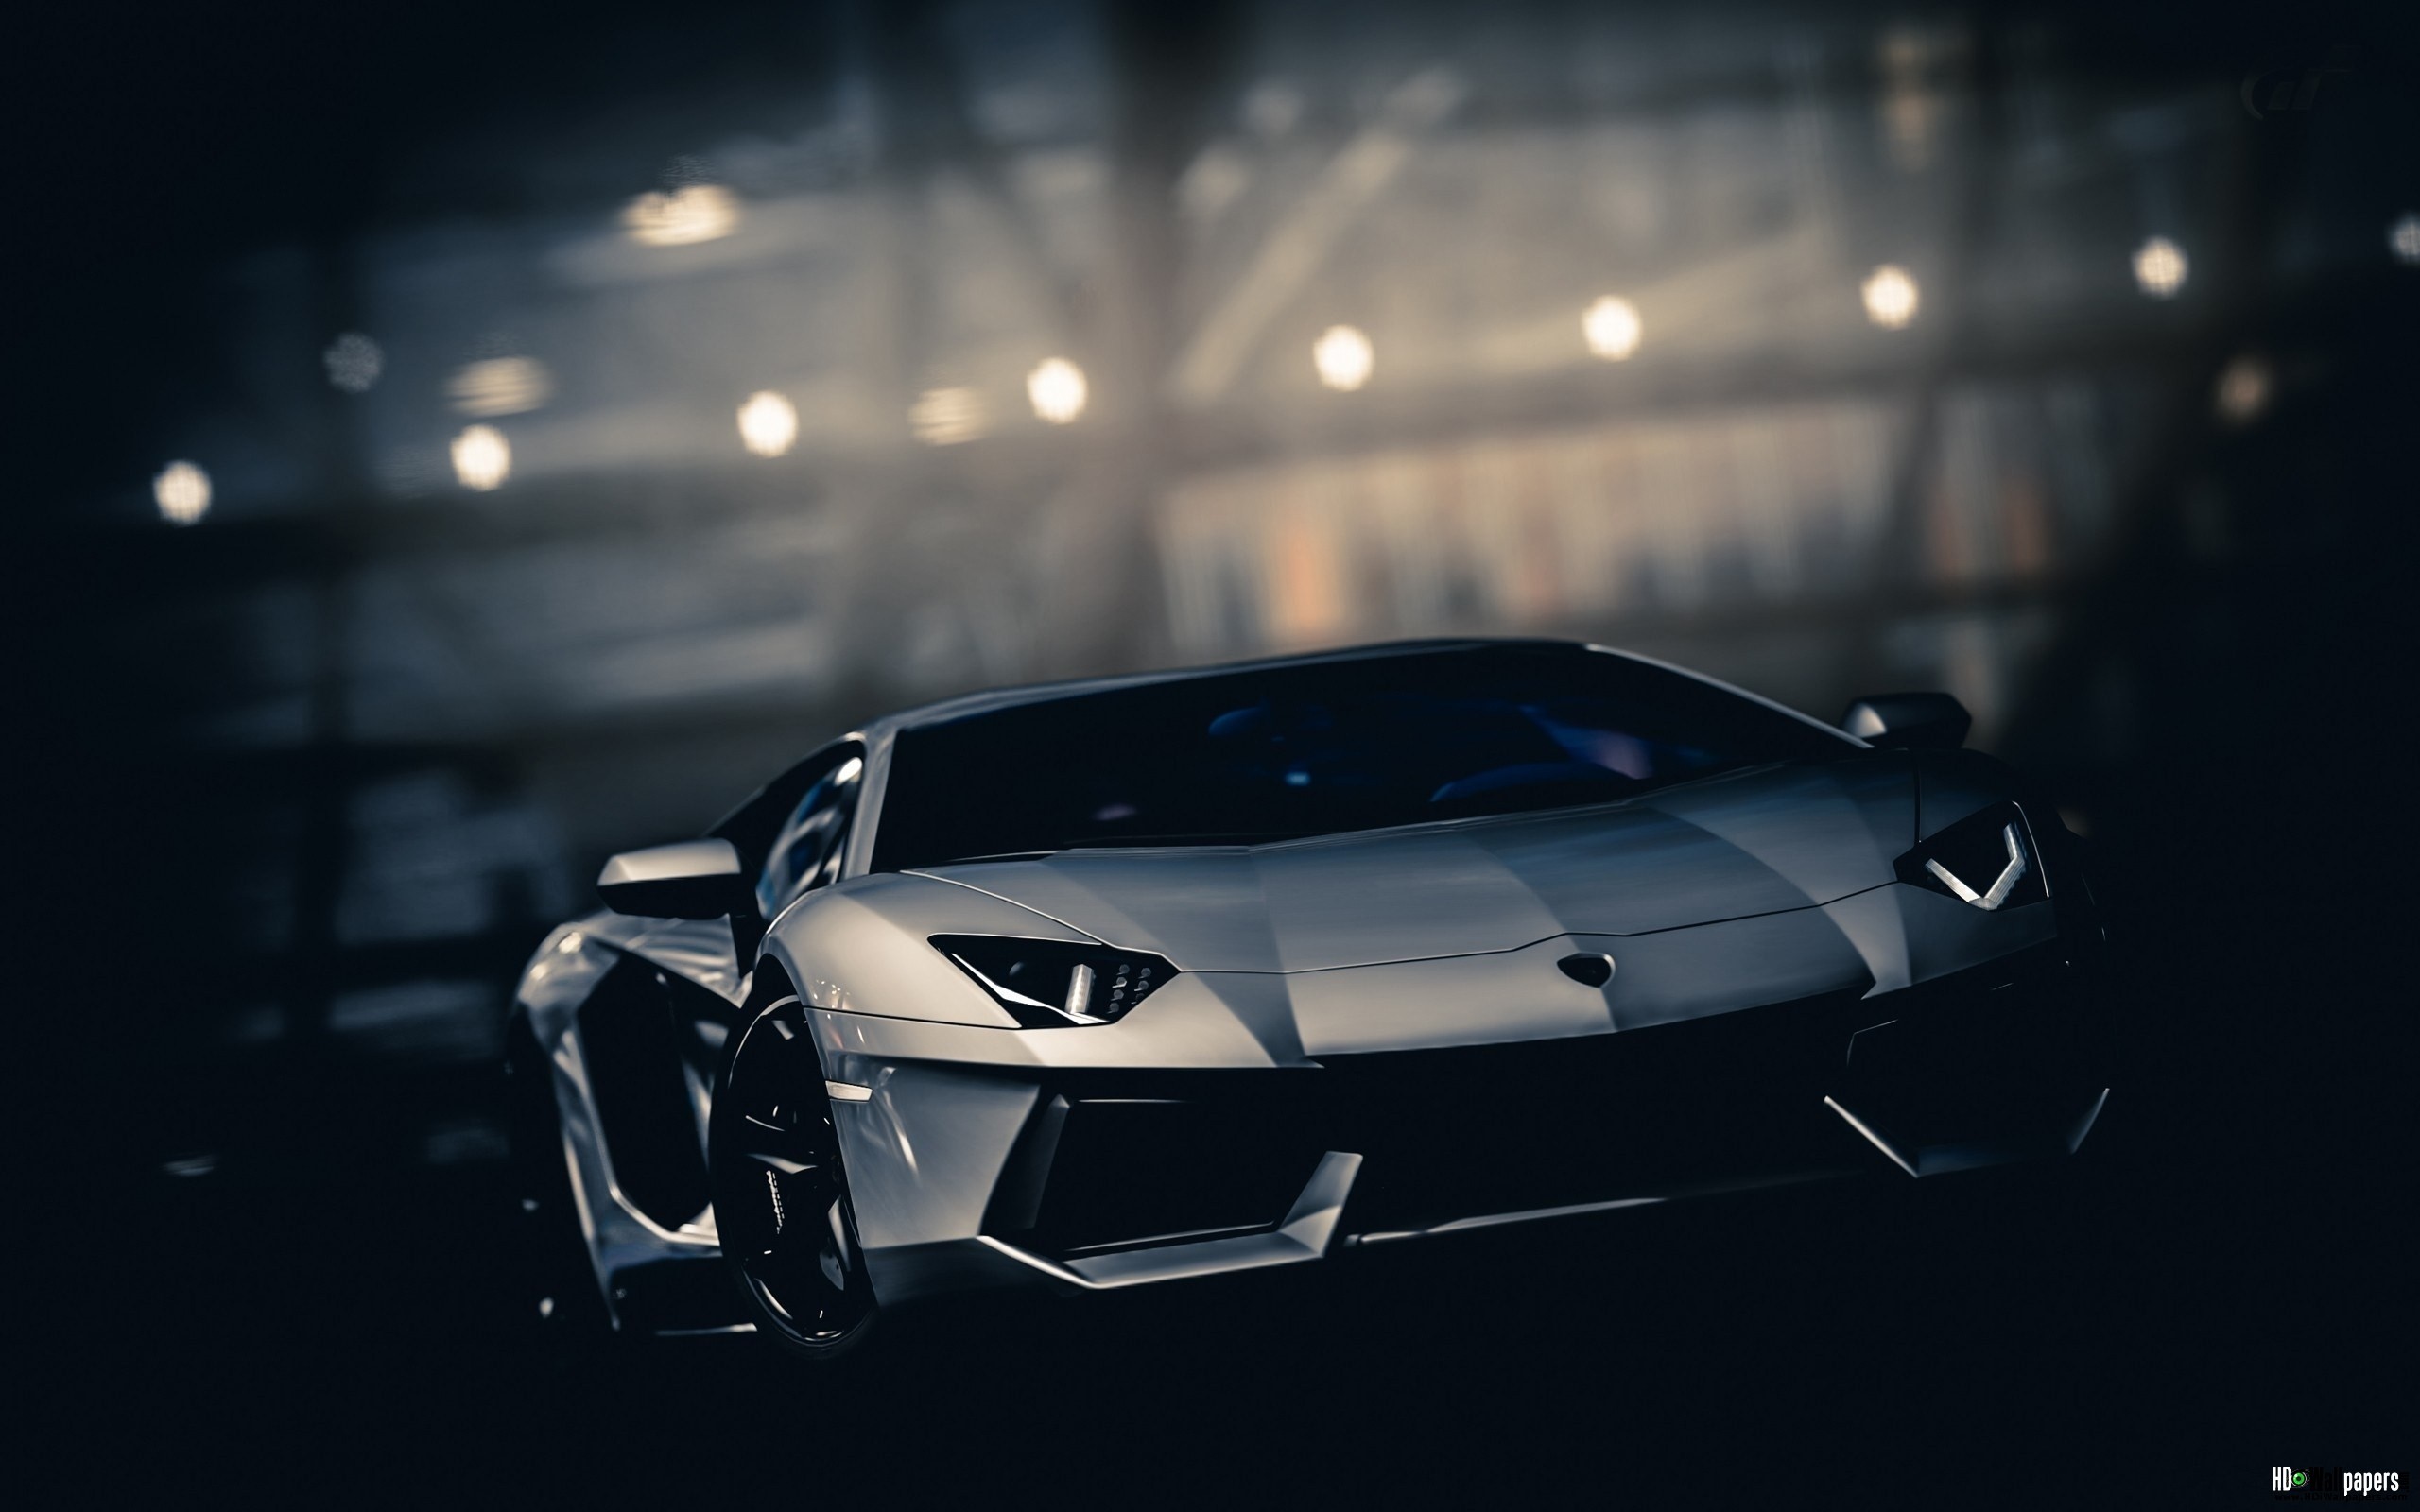 2560x1600 Lamborghini top hd wallpapers http://worldcricketevents.com/lamborghini-hd- wallpapers-free-download/ | Lamborghini hd wallpapers for desktop |  Pinterest ...